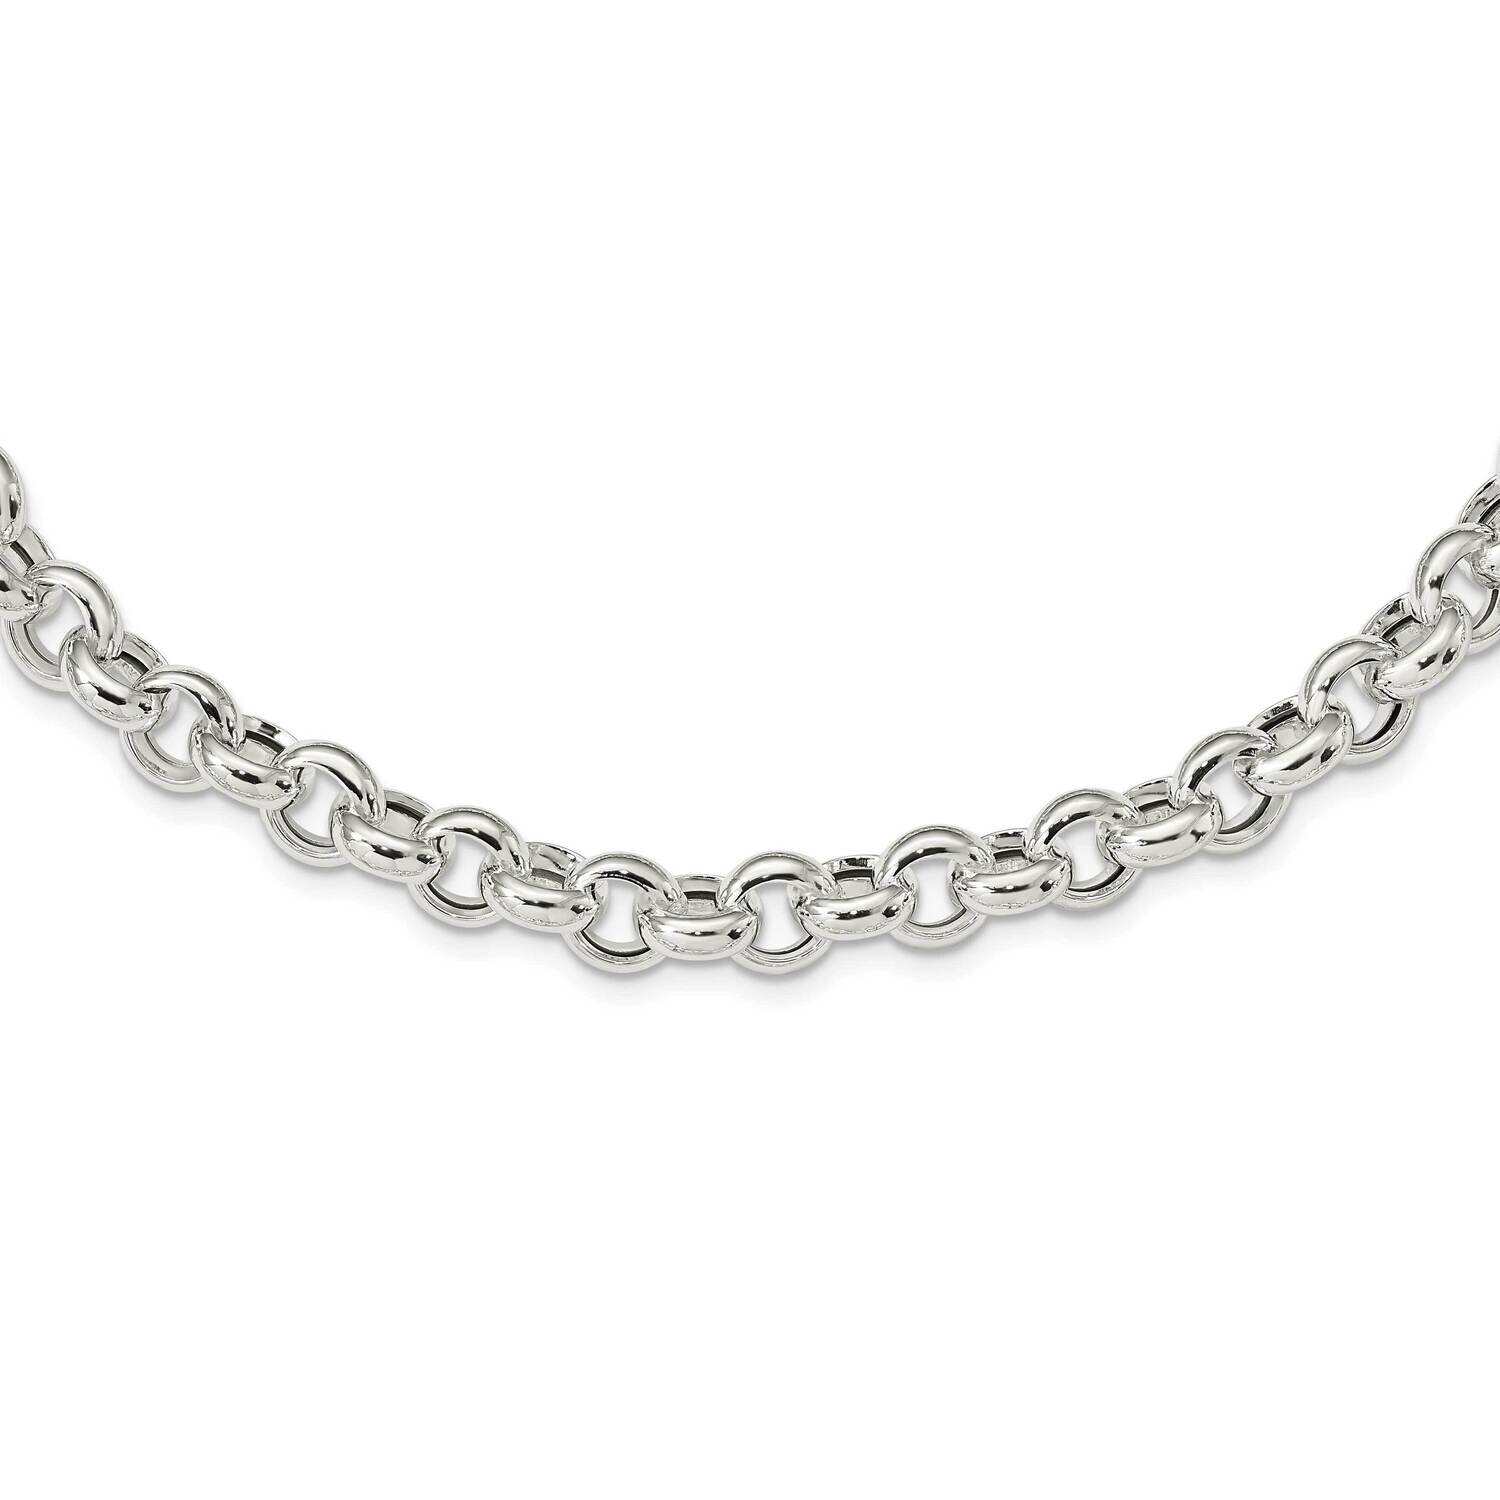 Fancy Link Necklace 24 Inch Sterling Silver Polished QG5964-24